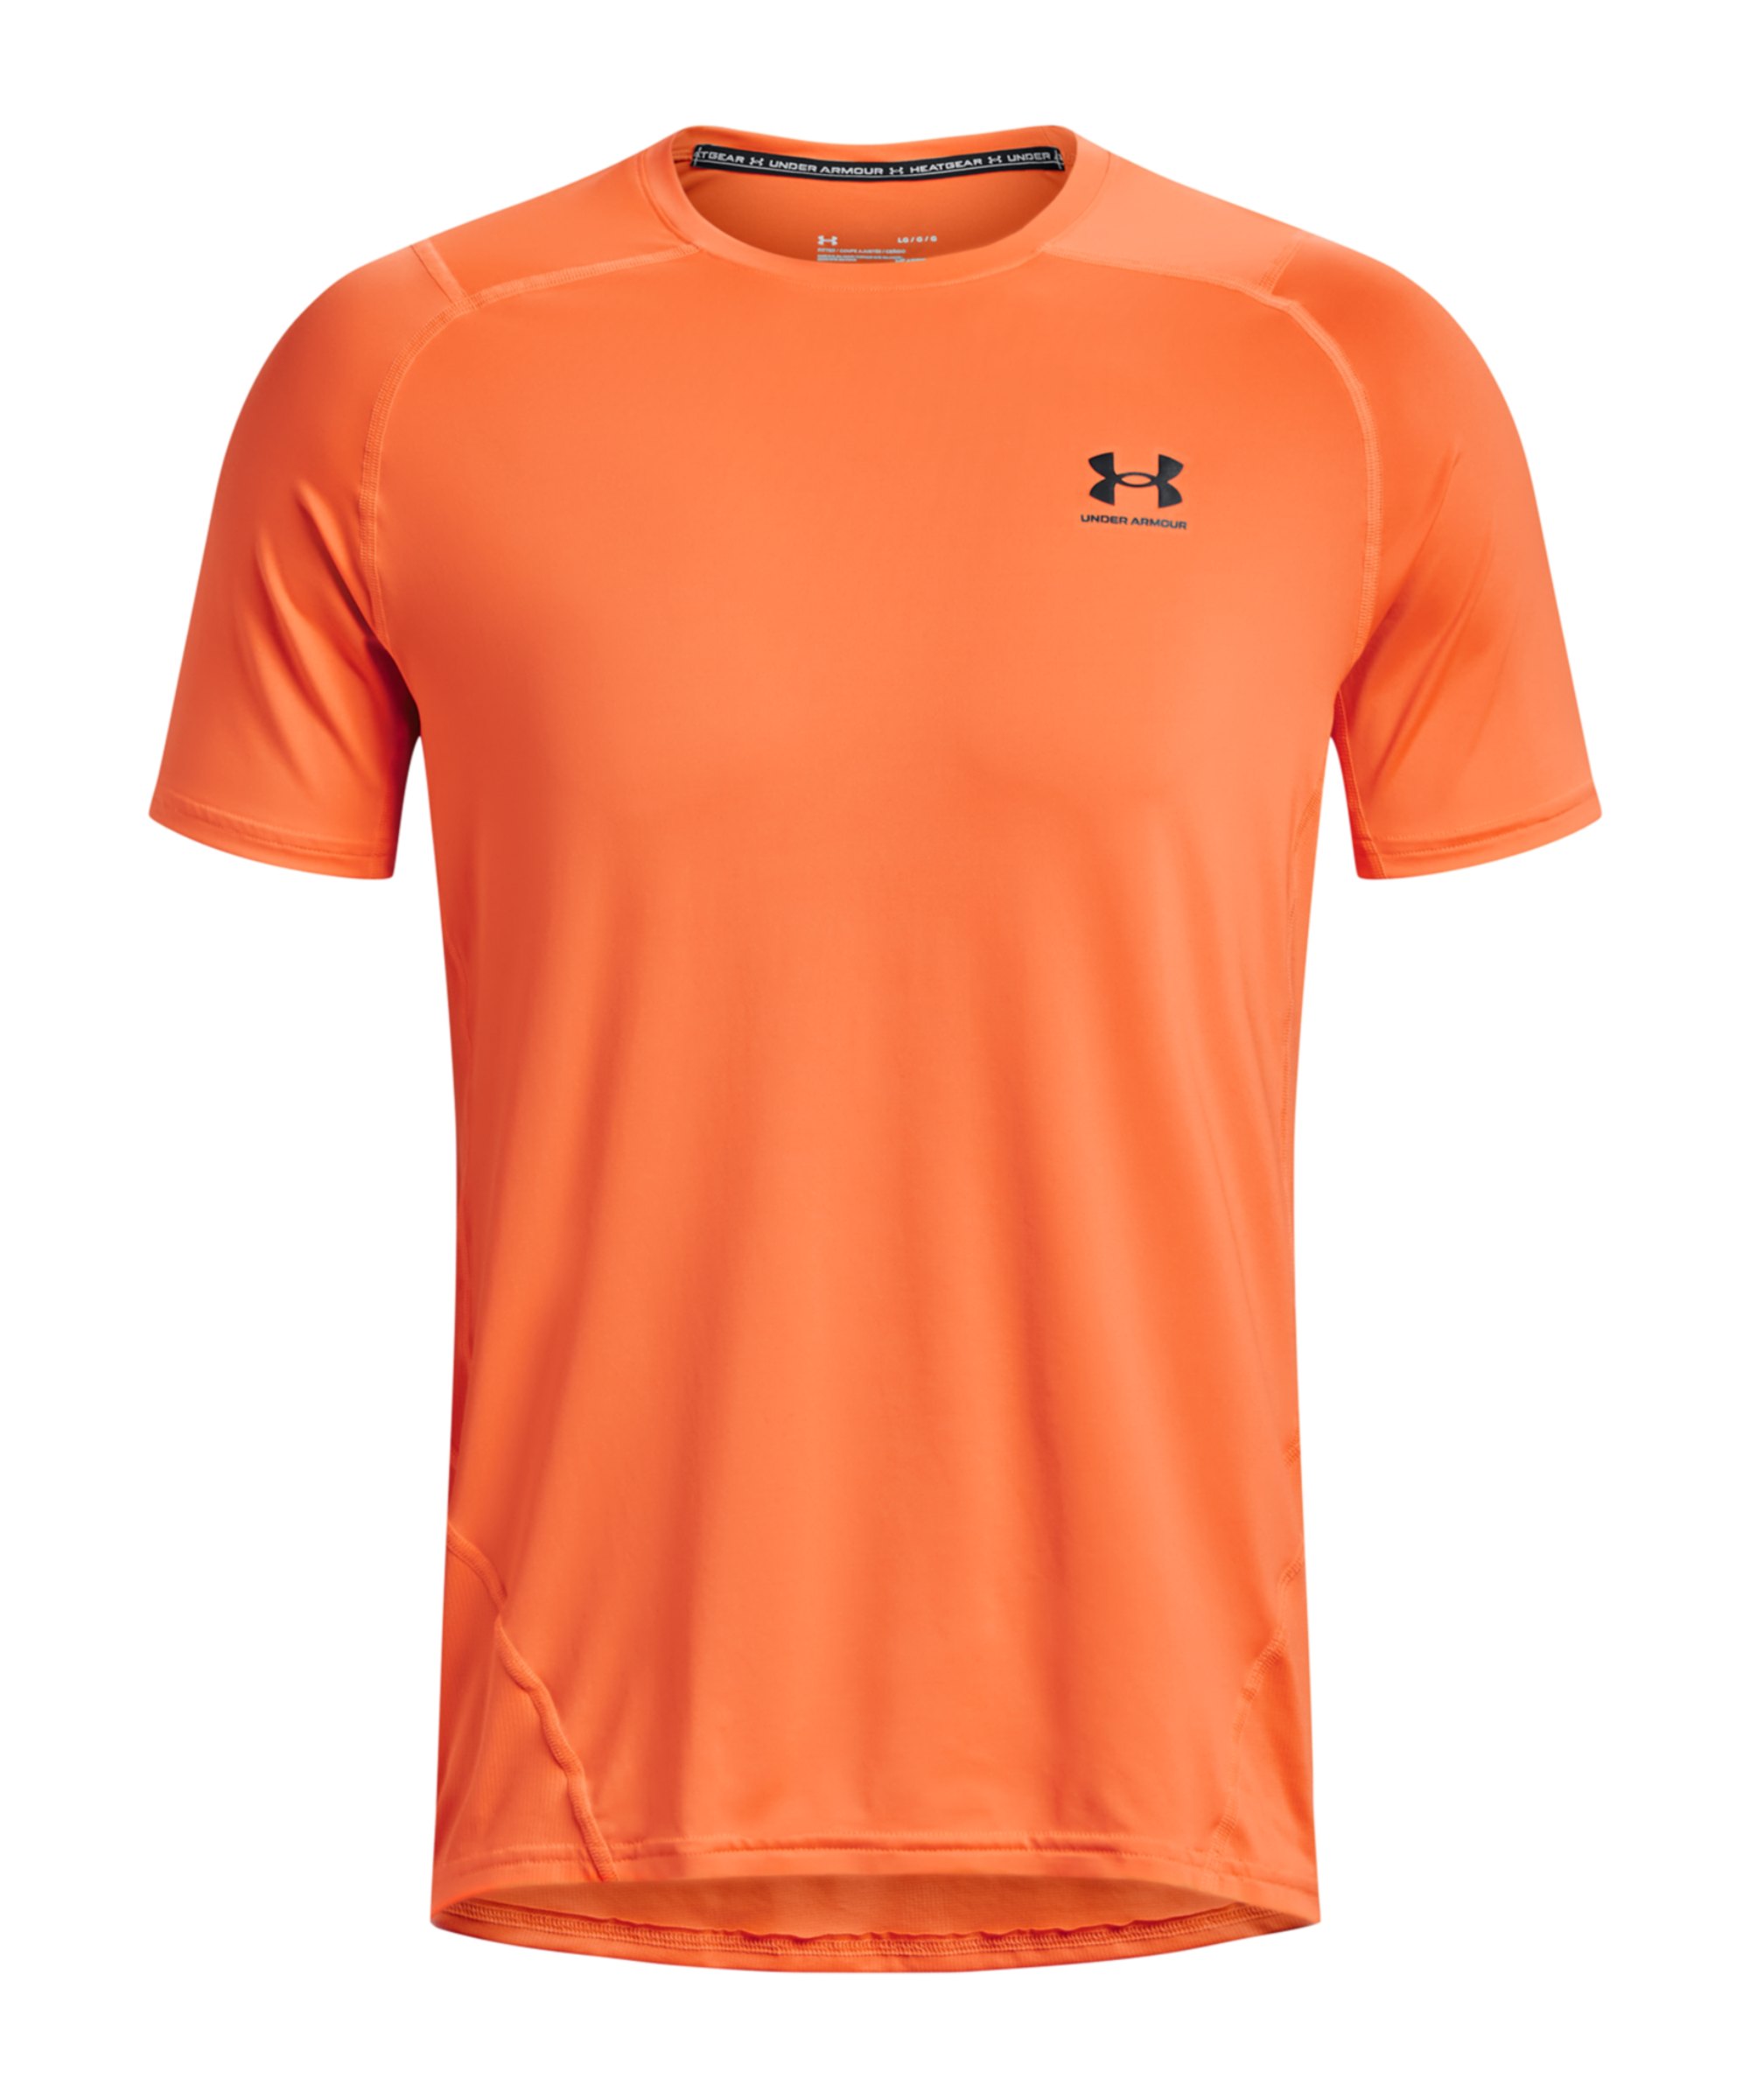 Under Armour Hg Fitted T-Shirt Orange F866 - orange